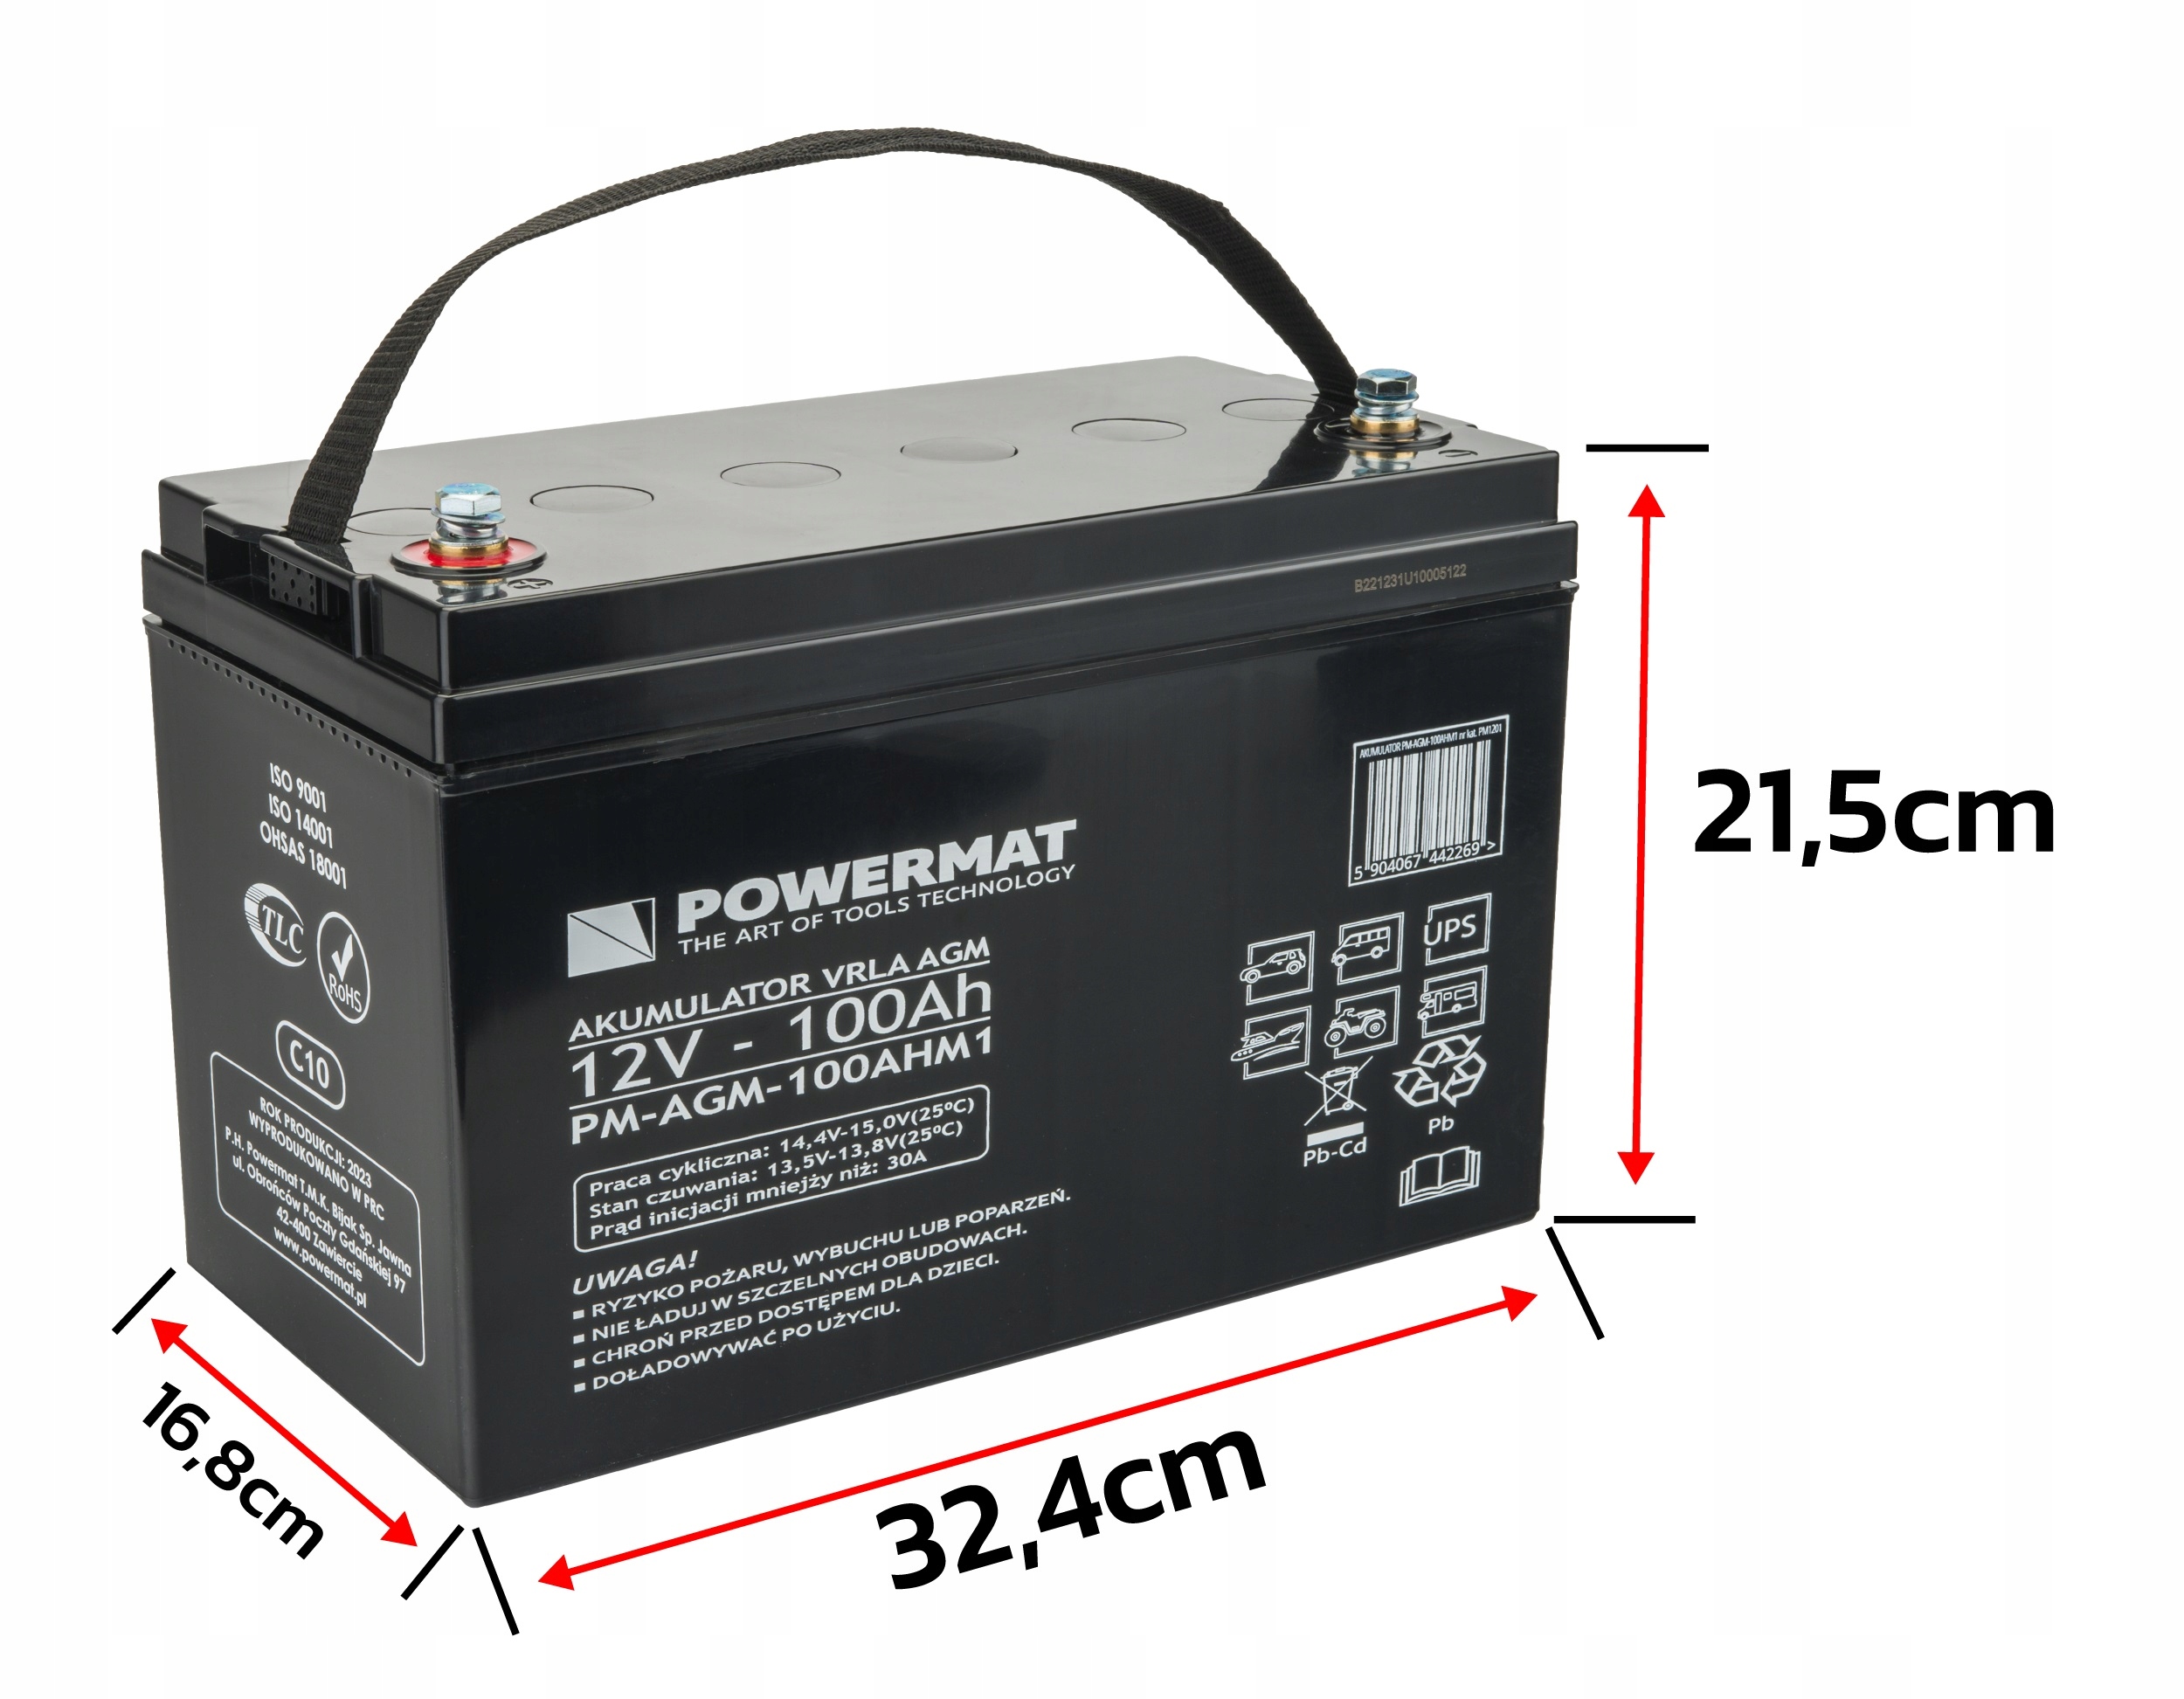 Akumulator VRLA AGM 12V 100Ah Bateria do UPS C10 Waga produktu z opakowaniem jednostkowym 28.2 kg